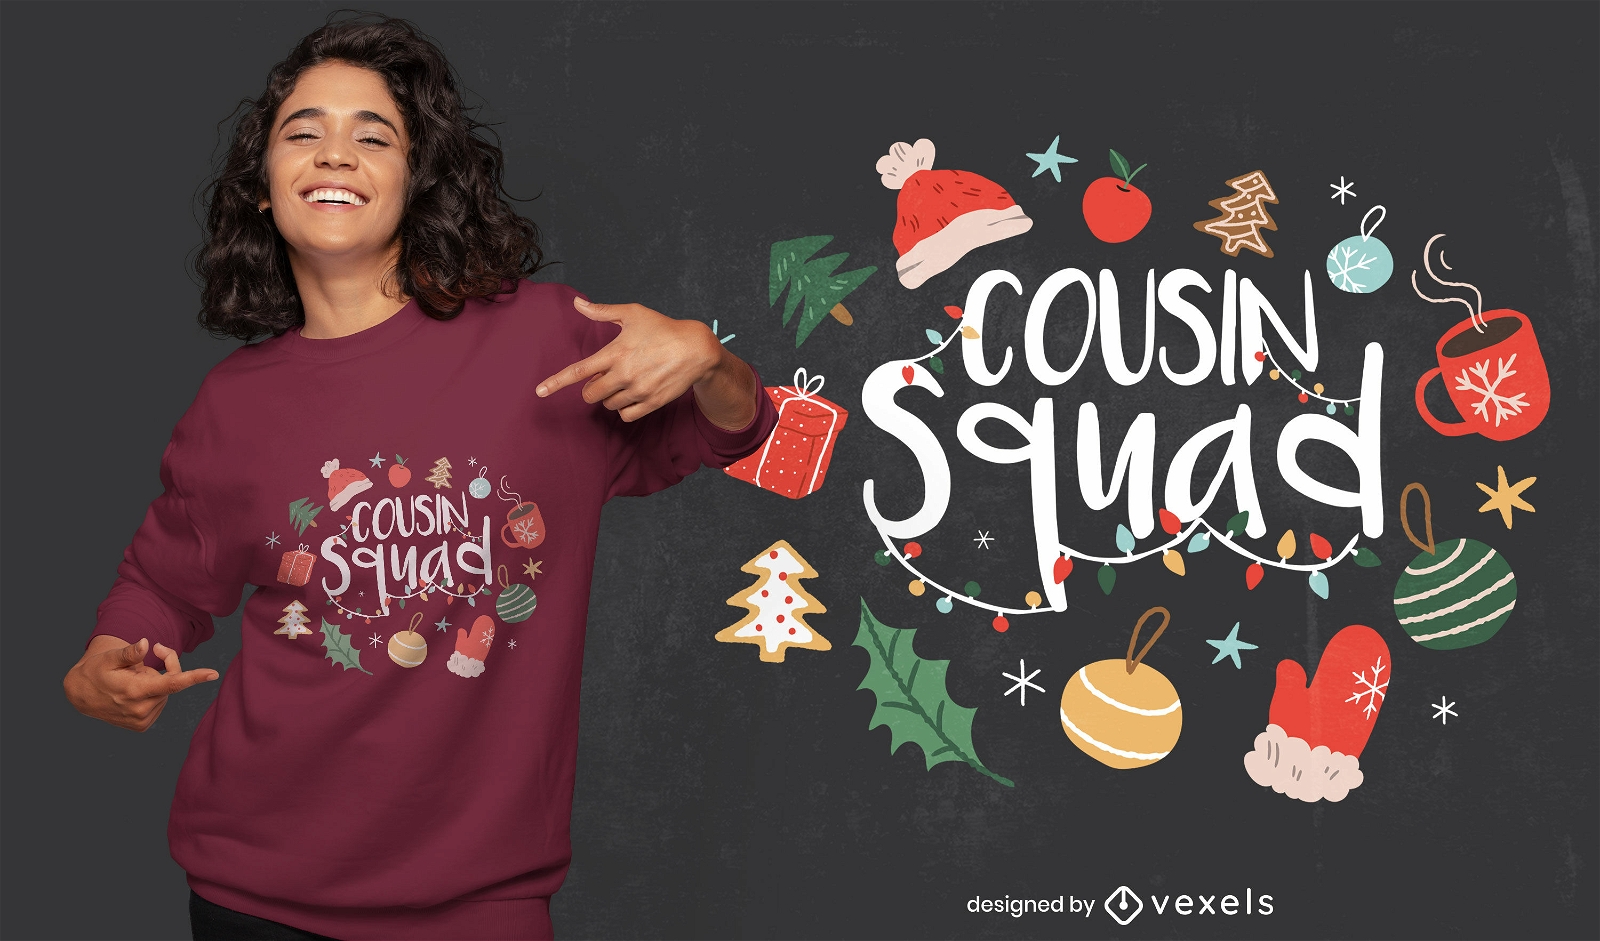 Cousin squad Christmas t-shirt design